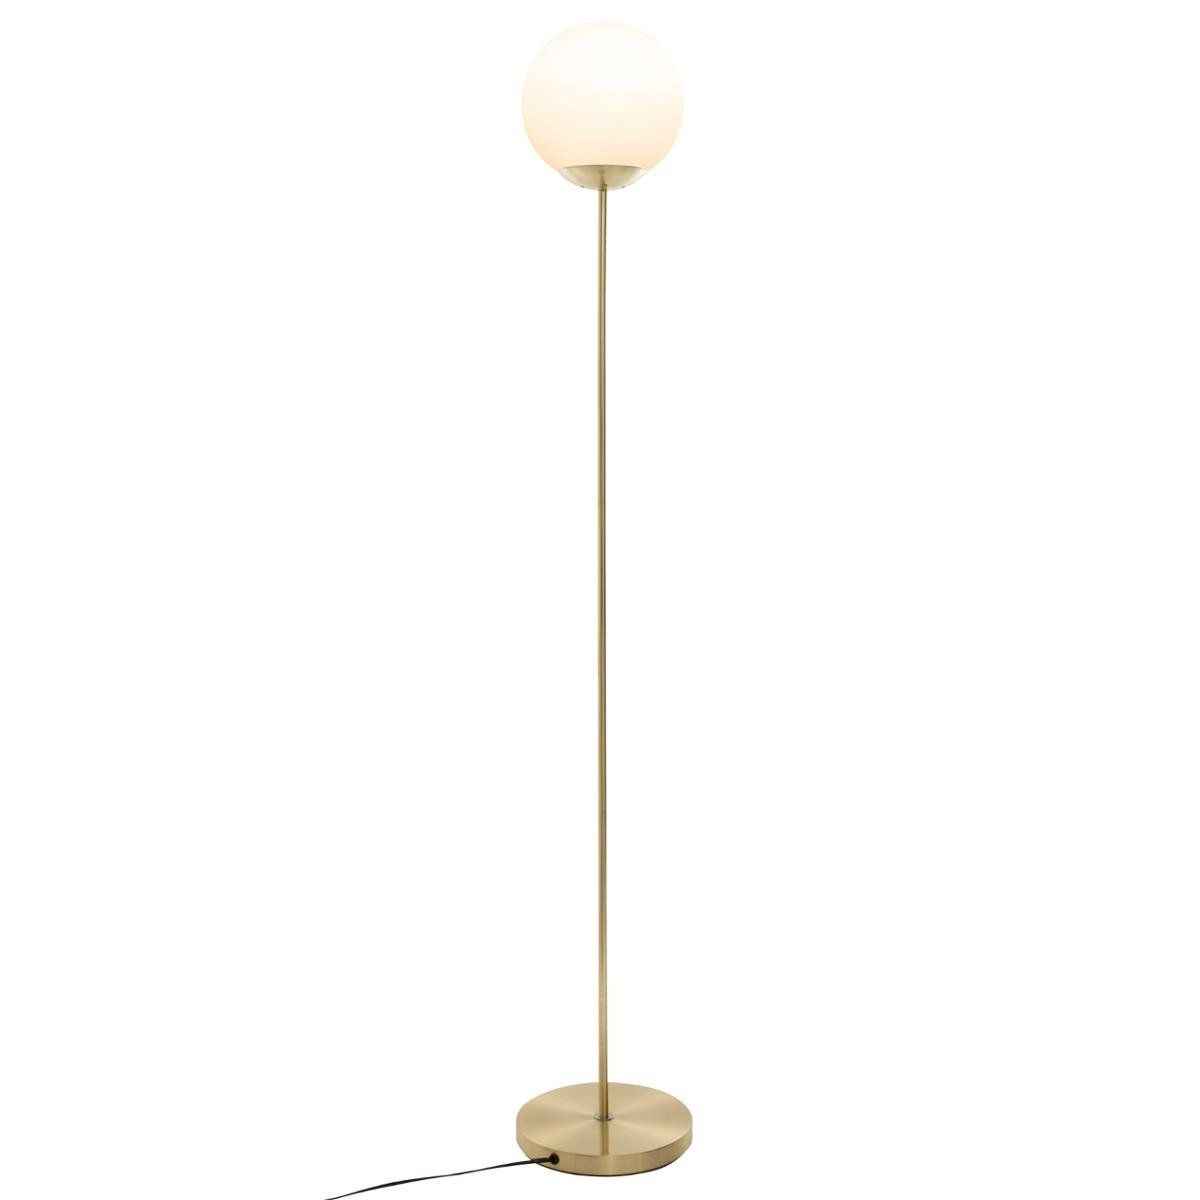 Atmosphera Stojací lampa s kulatým stínítkem, kov, zlato, 134 cm - EDAXO.CZ s.r.o.